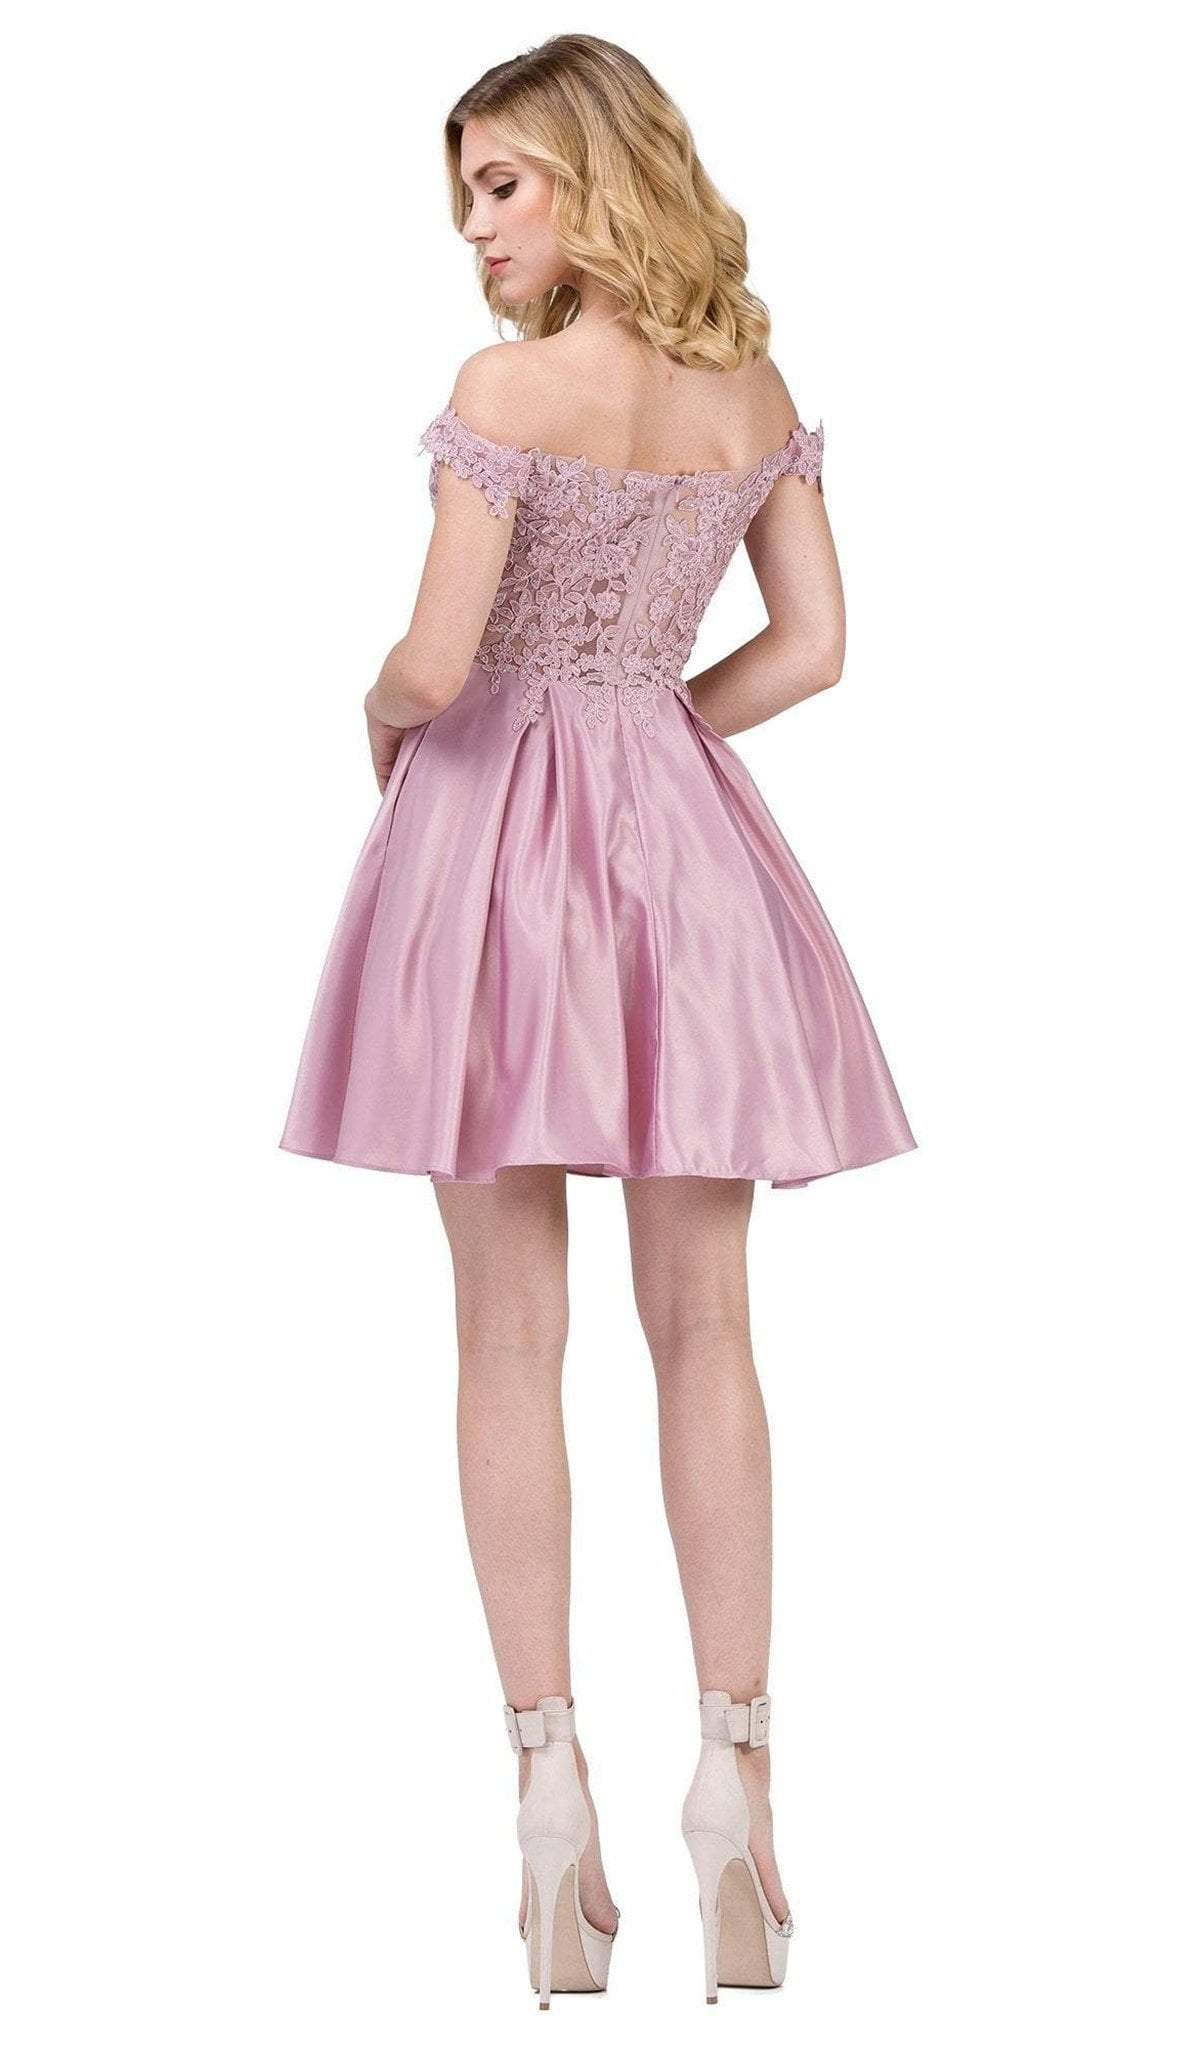 Dancing Queen - 3029 Off-Shoulder A-Line Homecoming Cocktail Dress in Pink